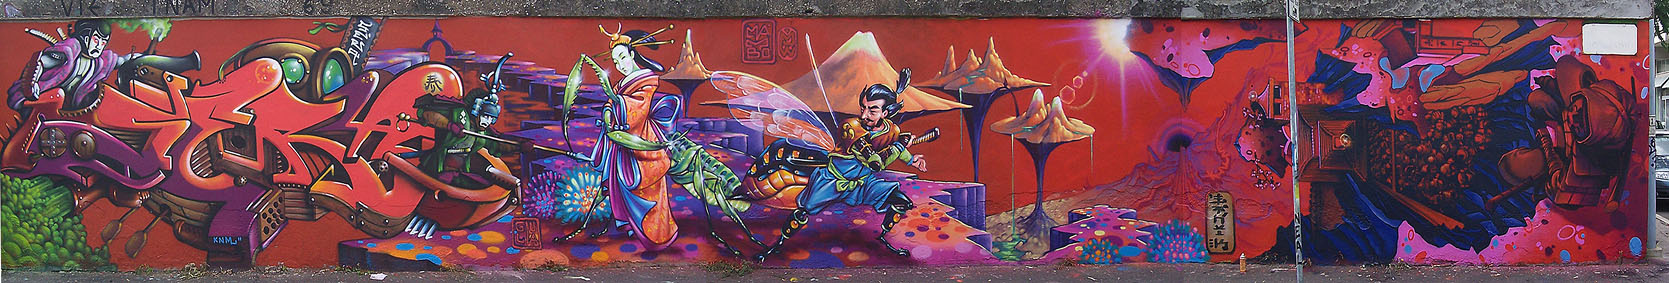 etnik - graffiti